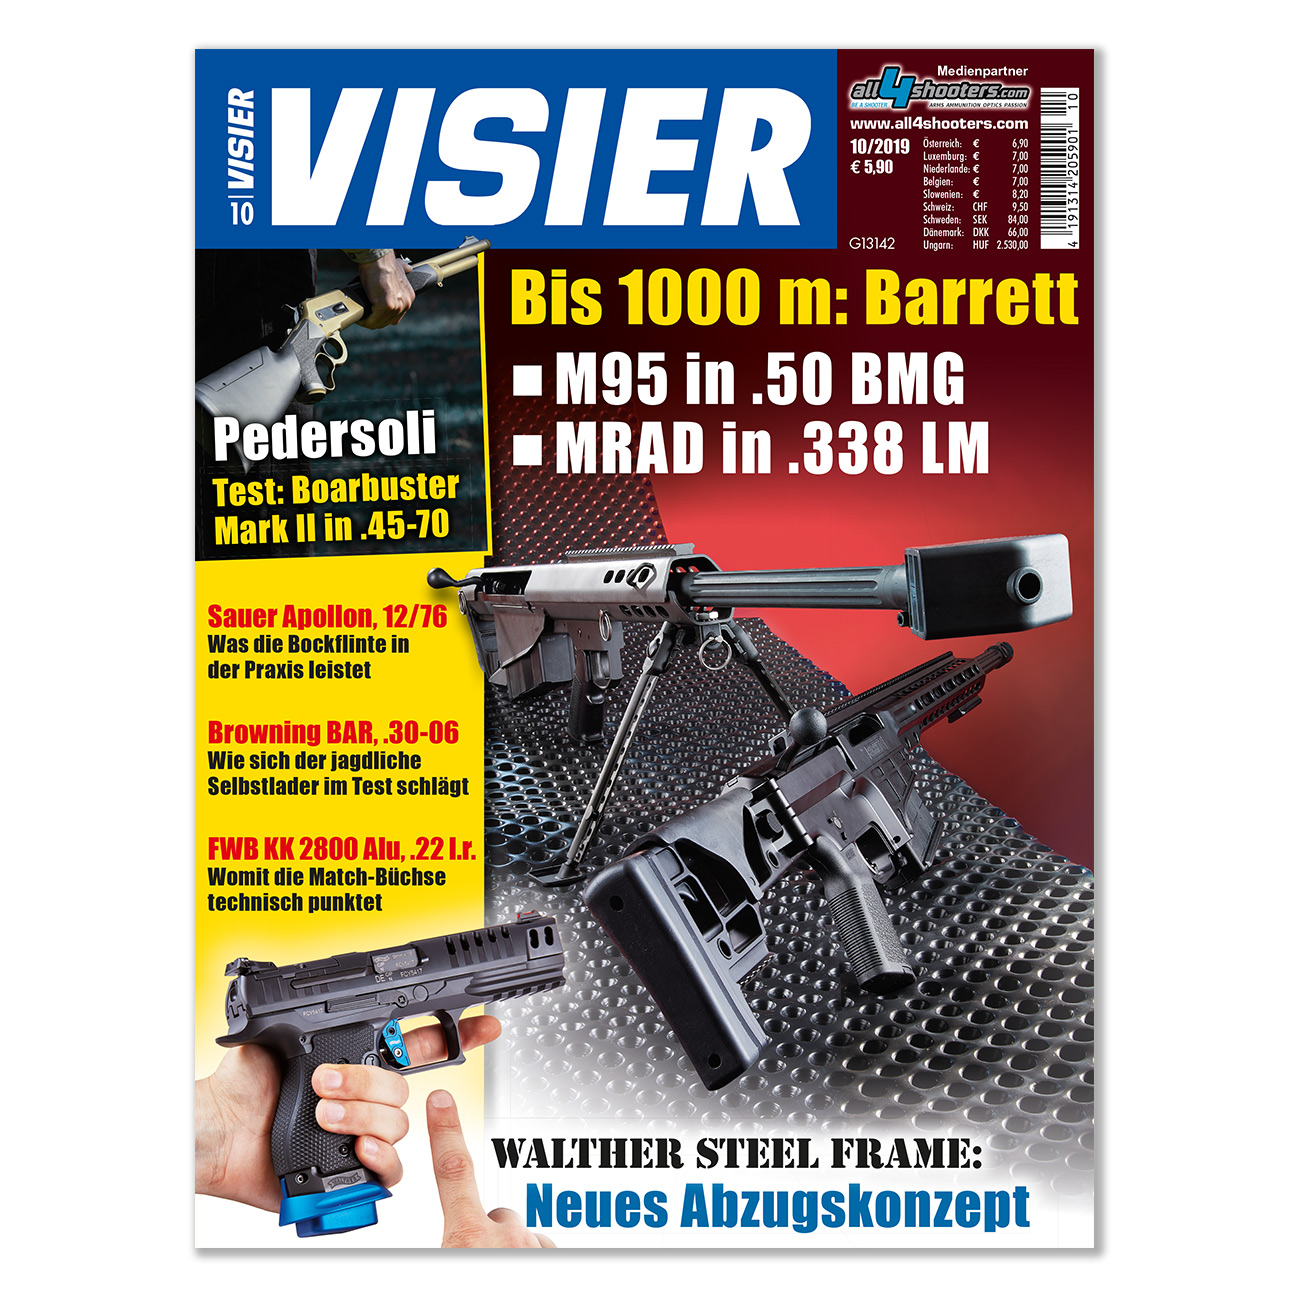 Visier - Bis 1000 m: Barrett, M95 in .50 BMG, MRAD in .338 LM 10/2019